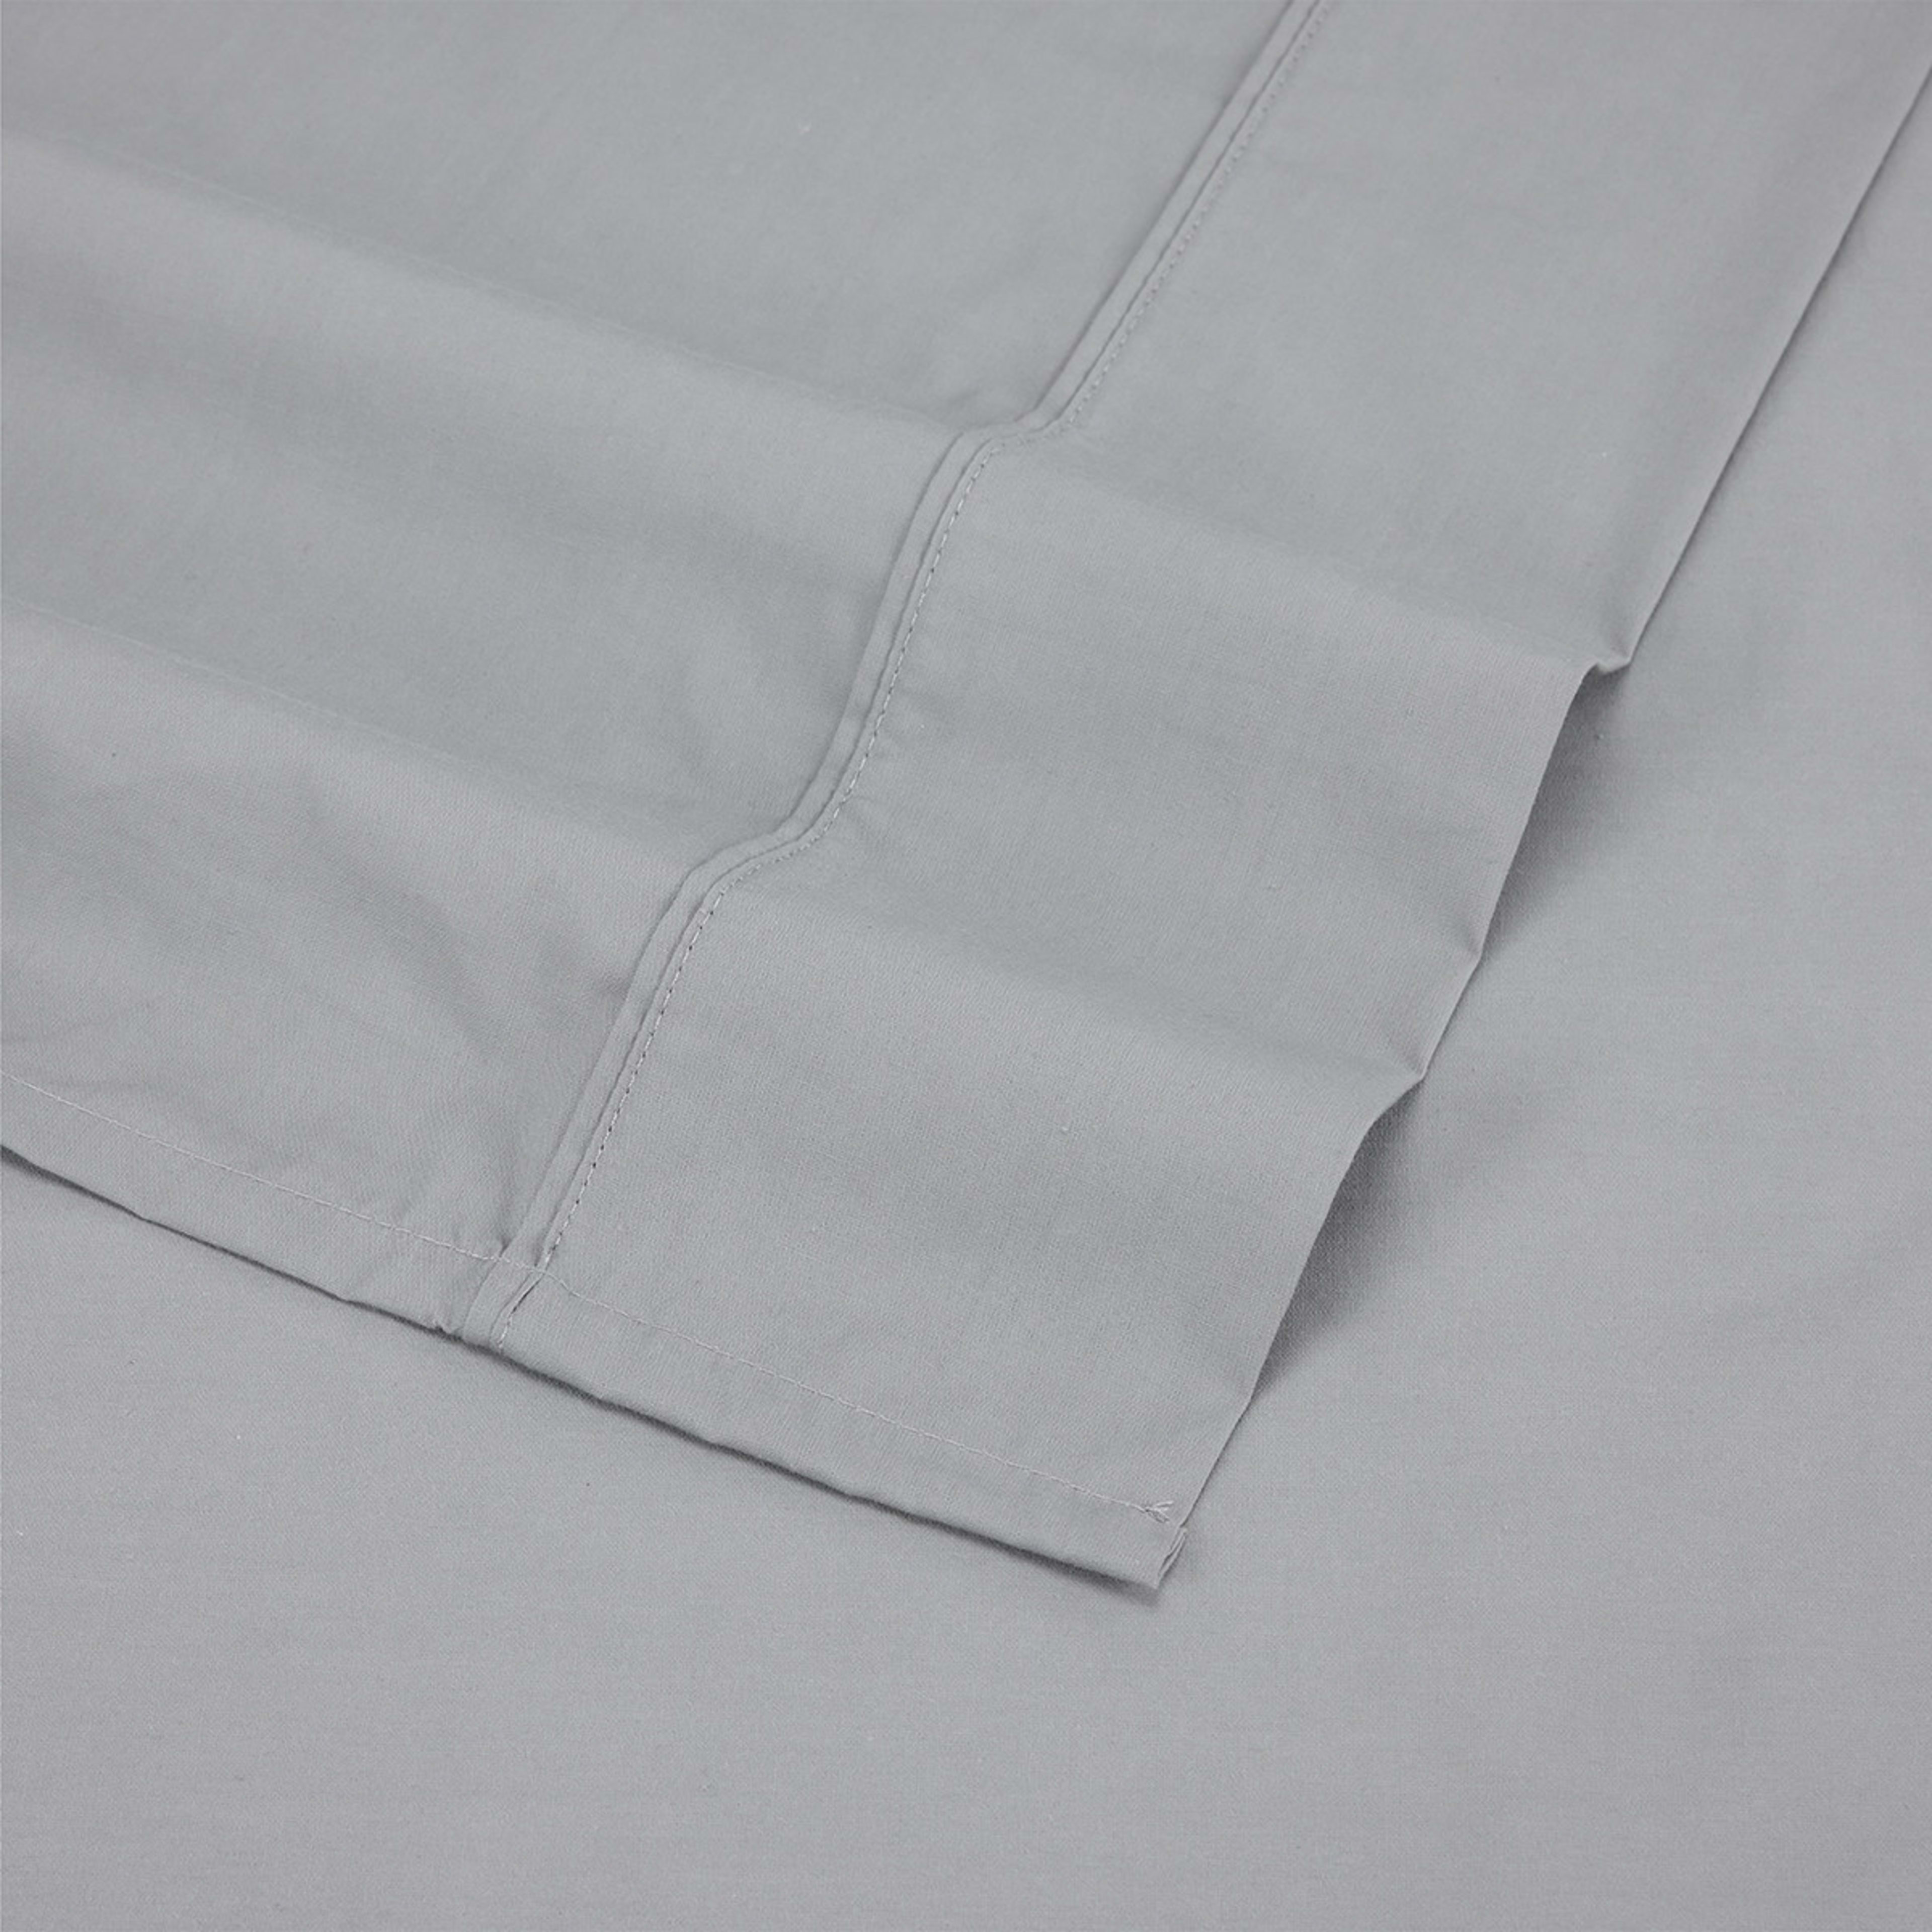 250 Thread Count Cotton Rich Sheet Set - Double Bed, Grey - Kmart